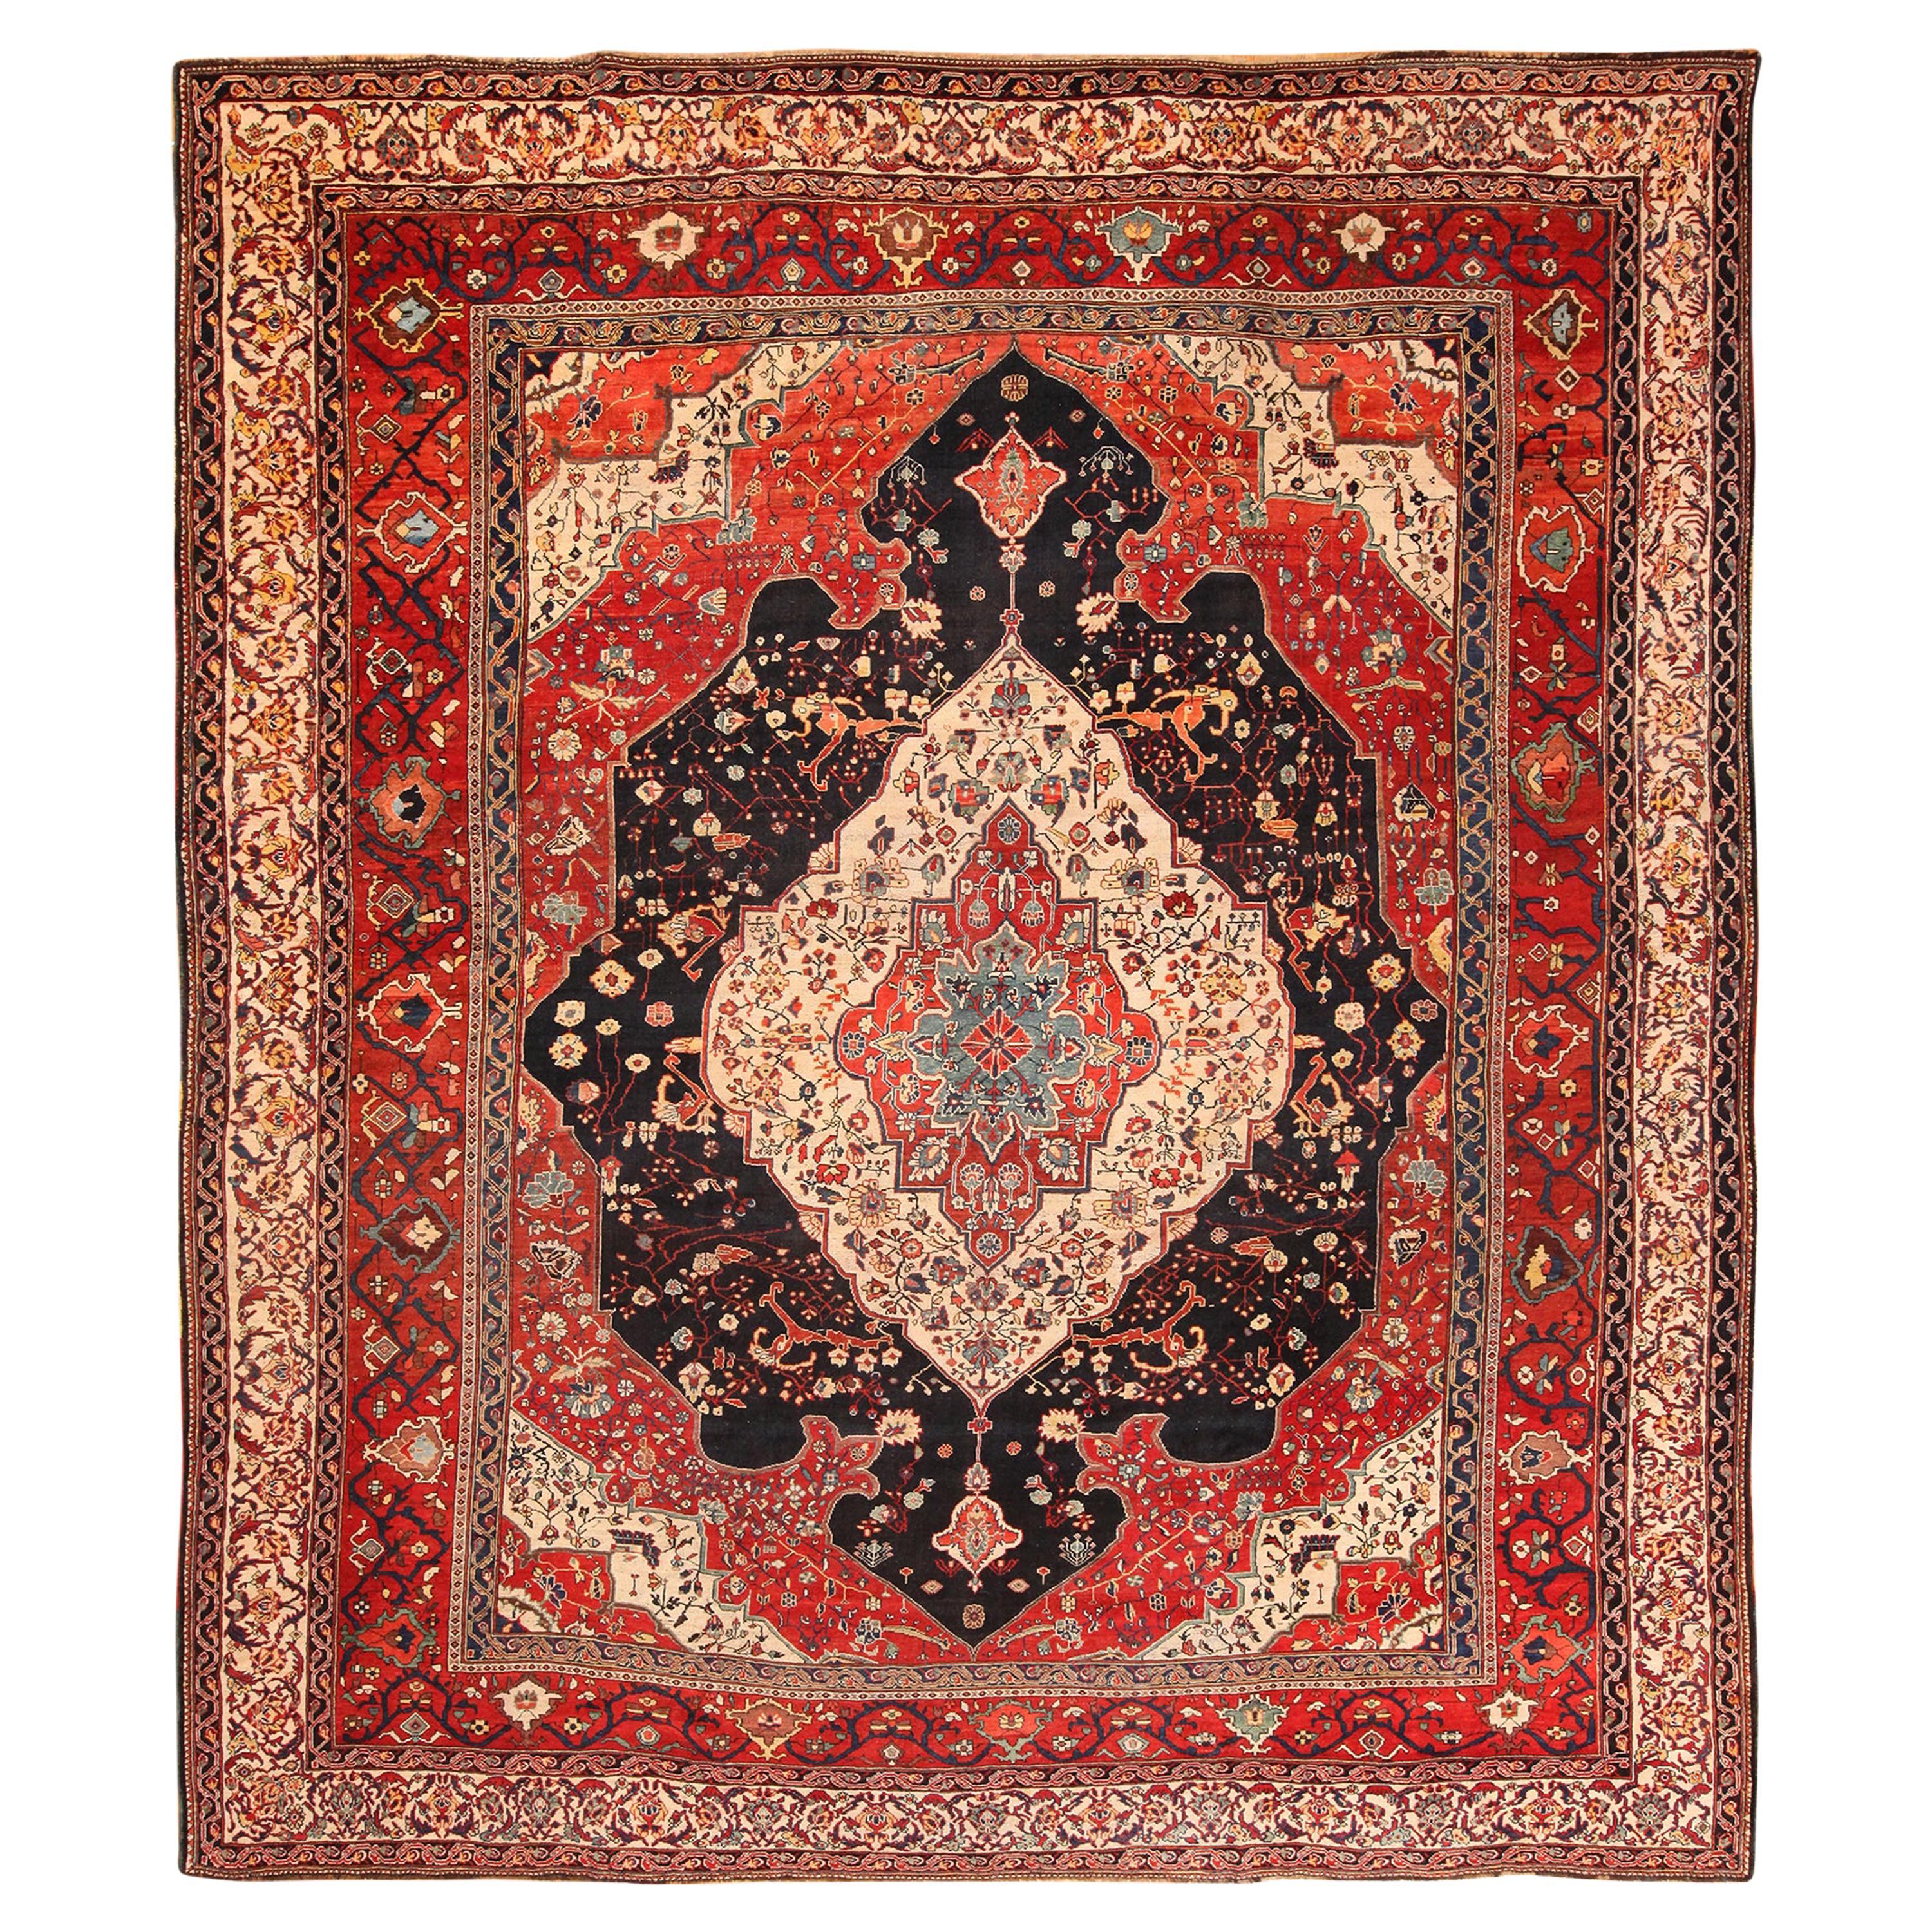 Antique Persian Bakhtiari Rug. Size: 11 ft 8 in x 14 ft (3.56 m x 4.27 m)